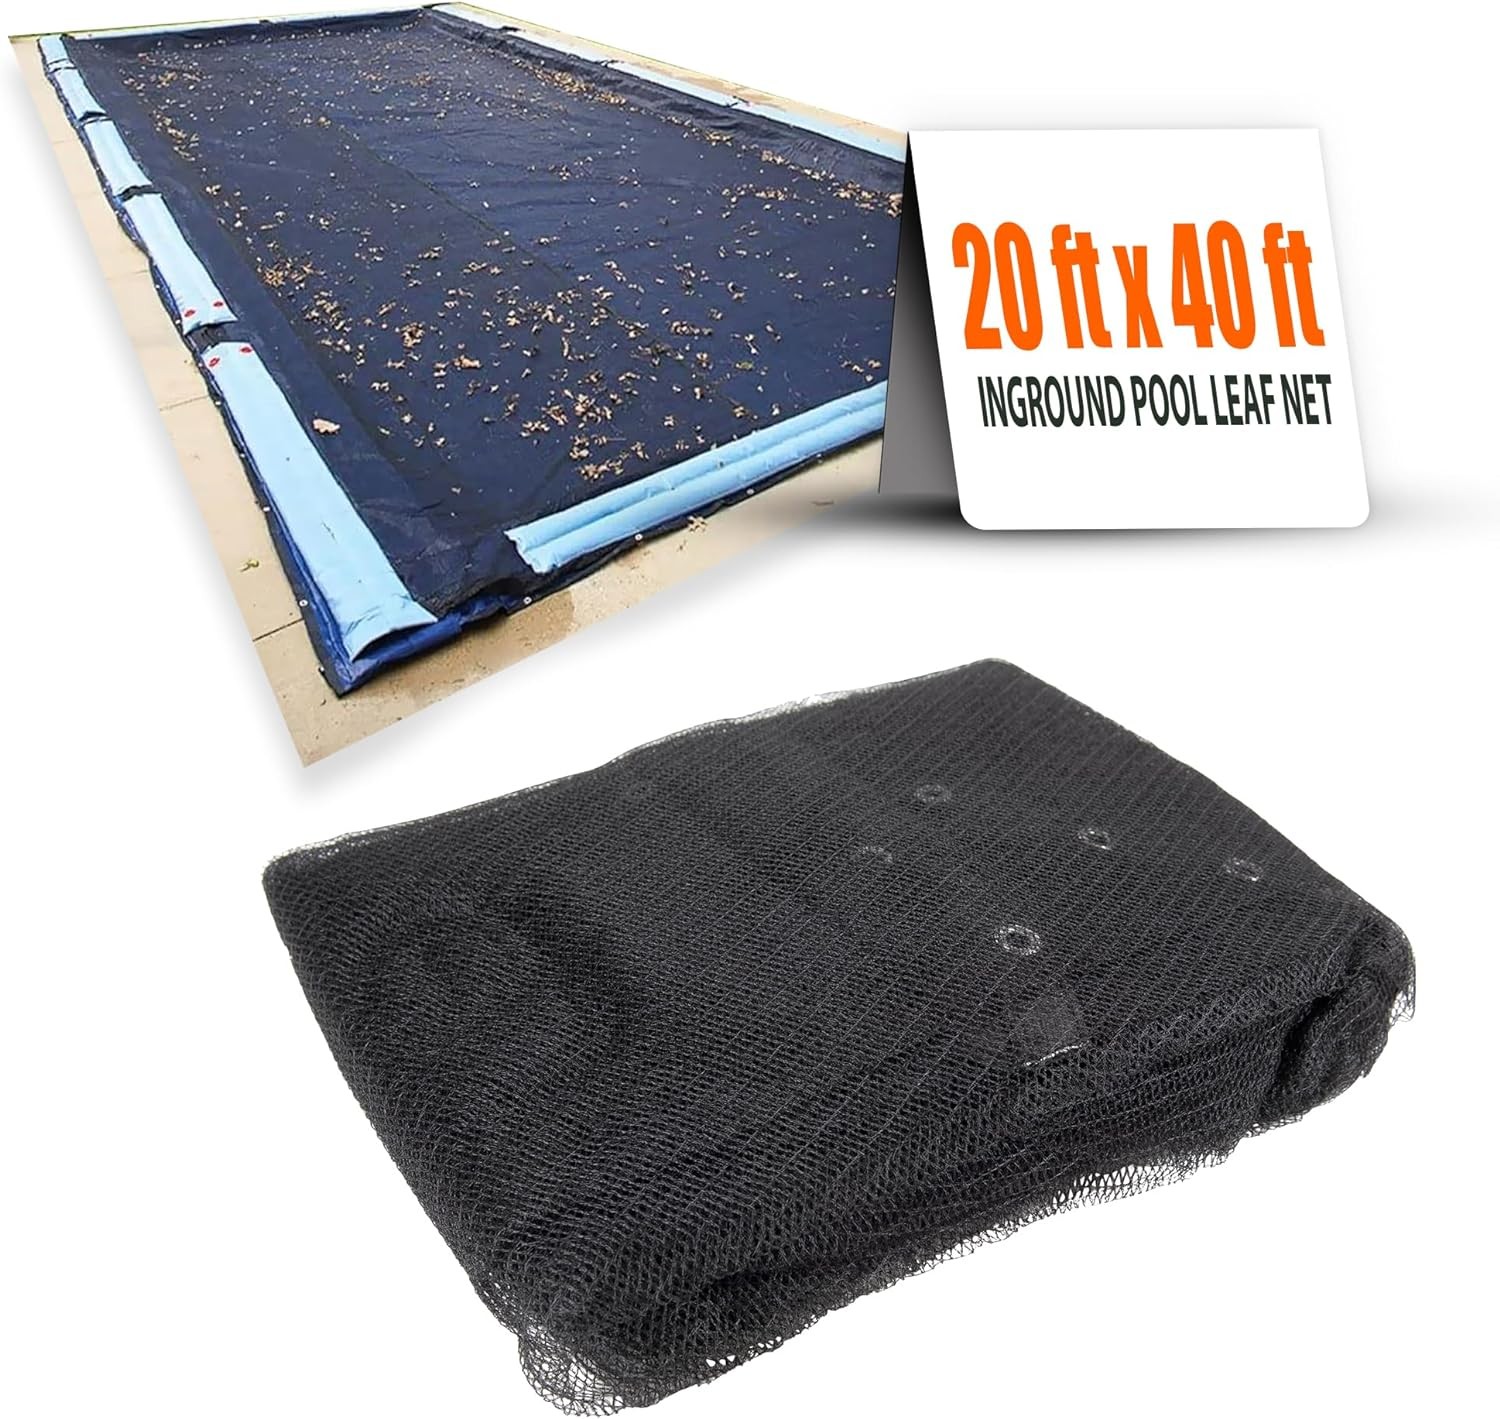 SET Sunsolar Energy Technologies Leaf Net Cover for 20 ft x 40 ft Rectangular Inground Swimming Pool with Extra 4 ft Overlap